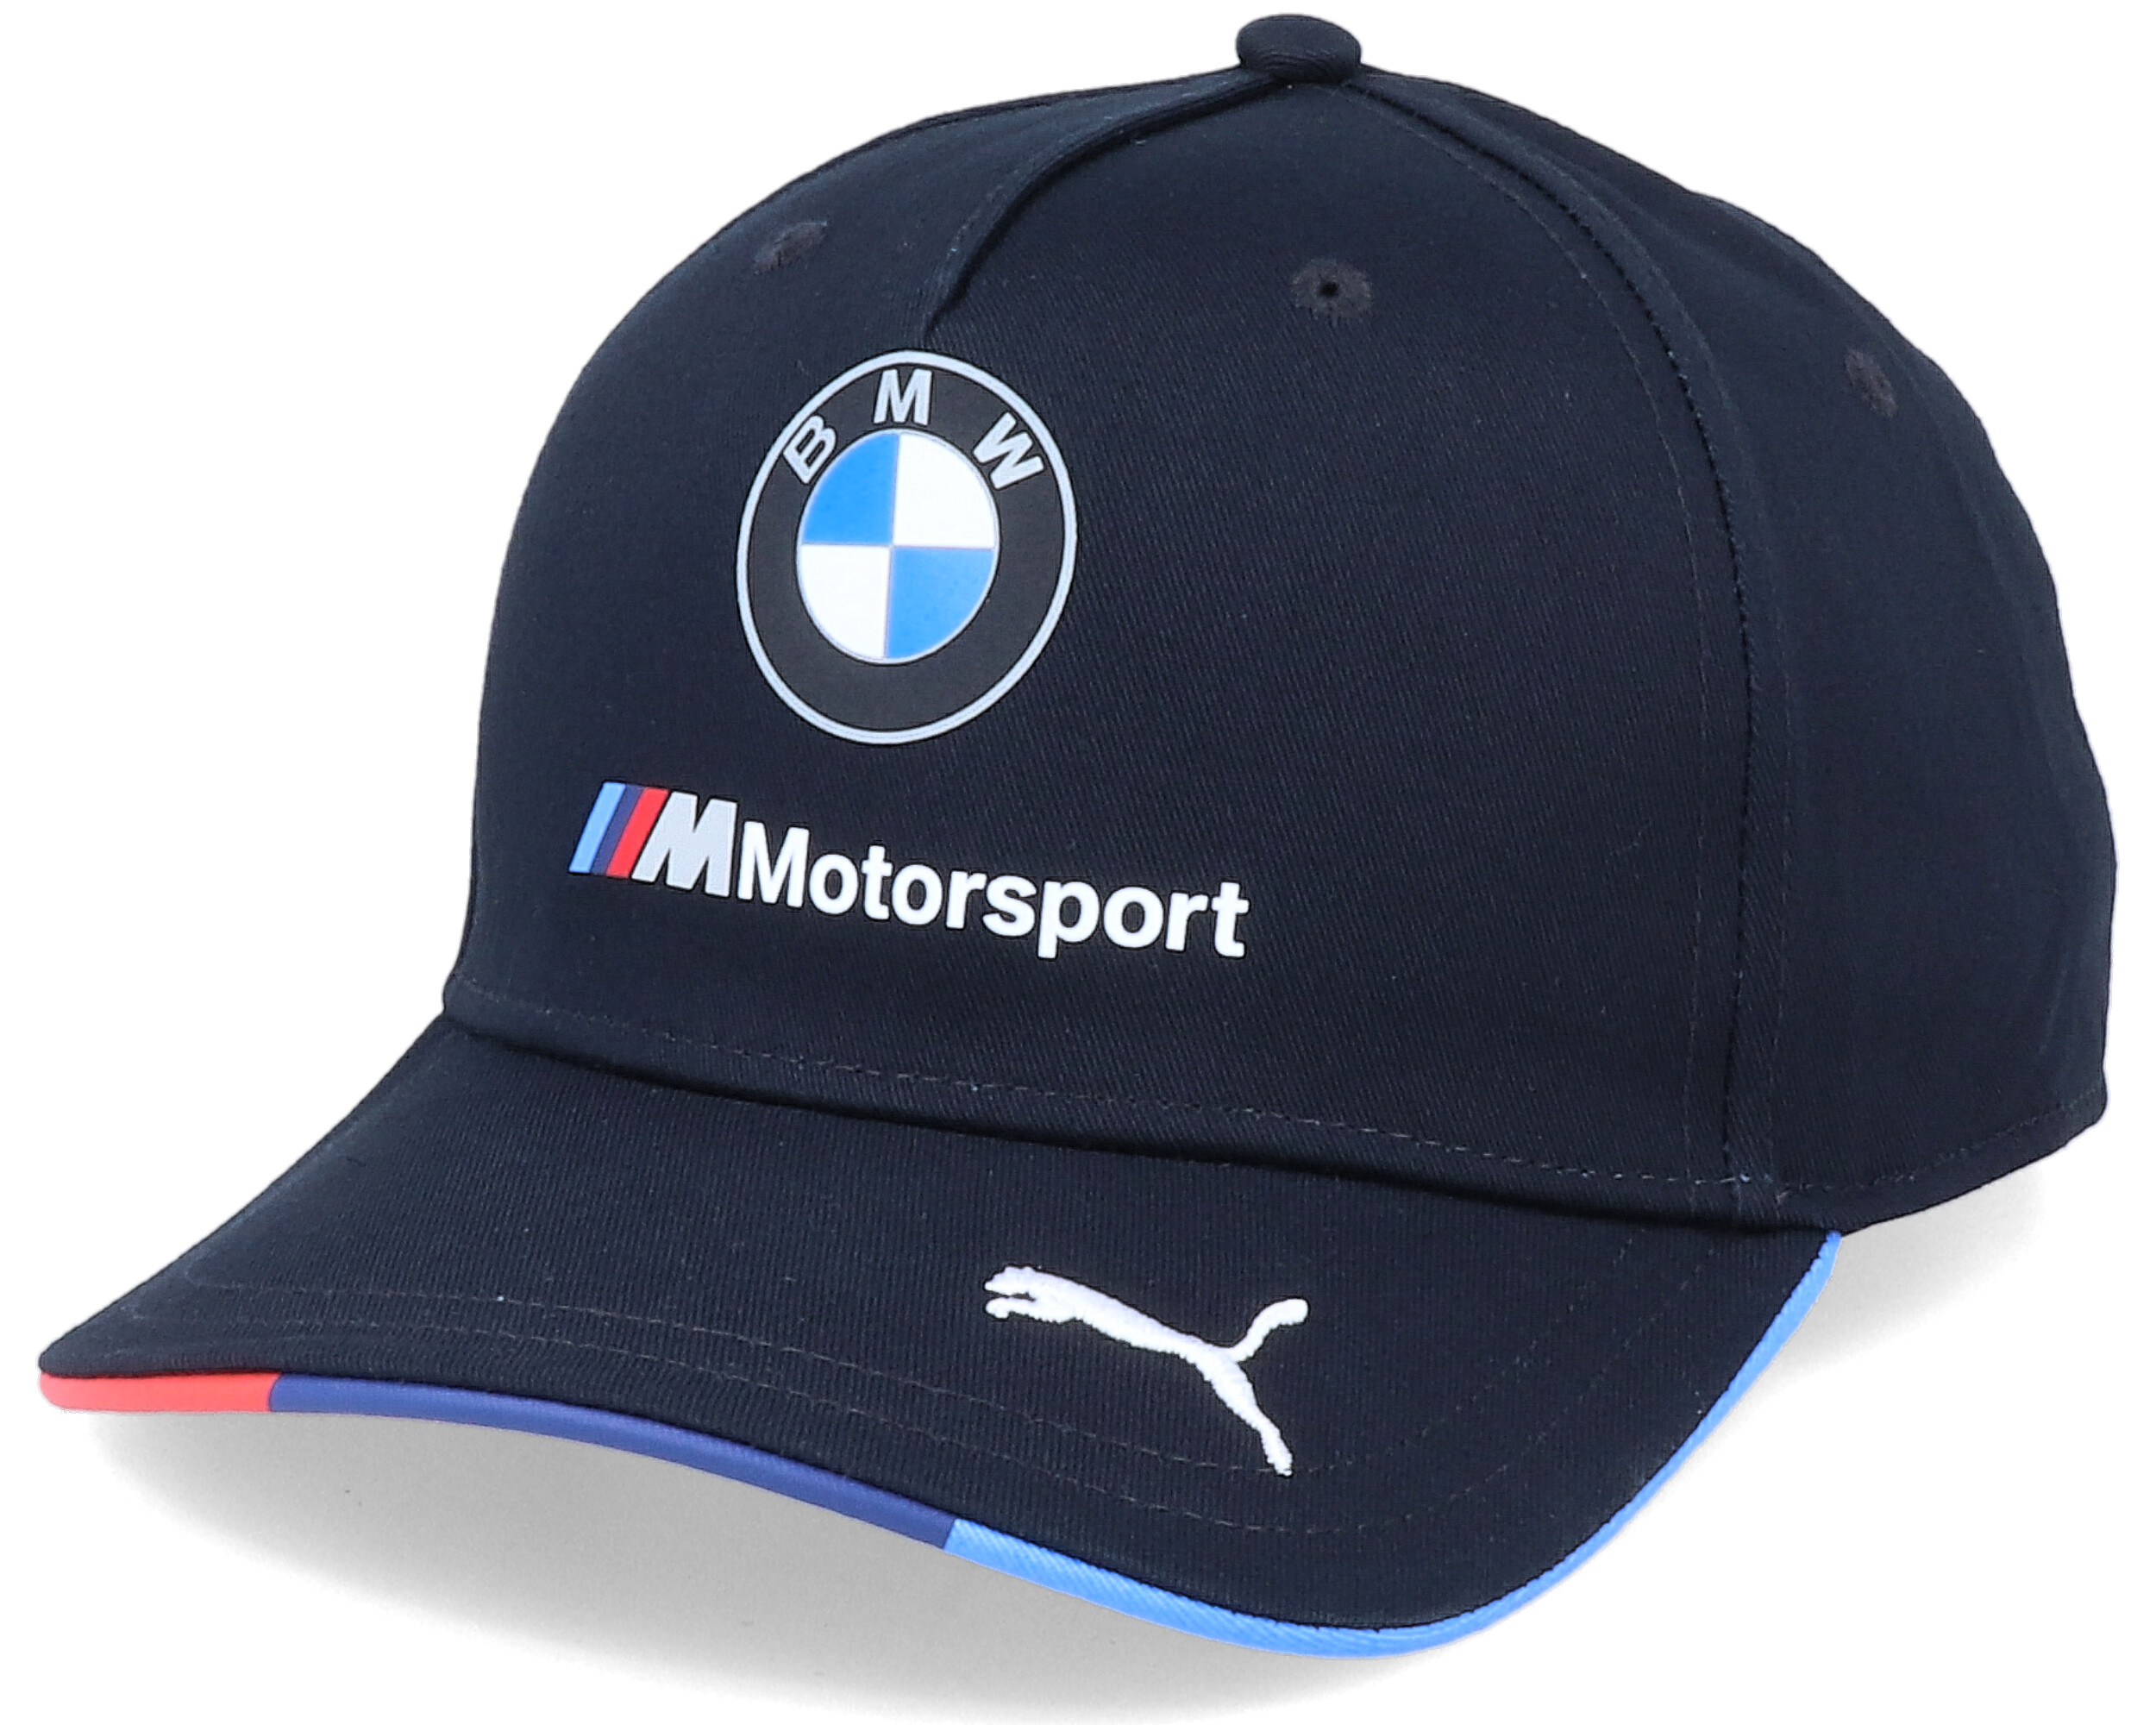 BMW M Motorsport Team Cap Black Adjustable - BMW Motorsport Cap